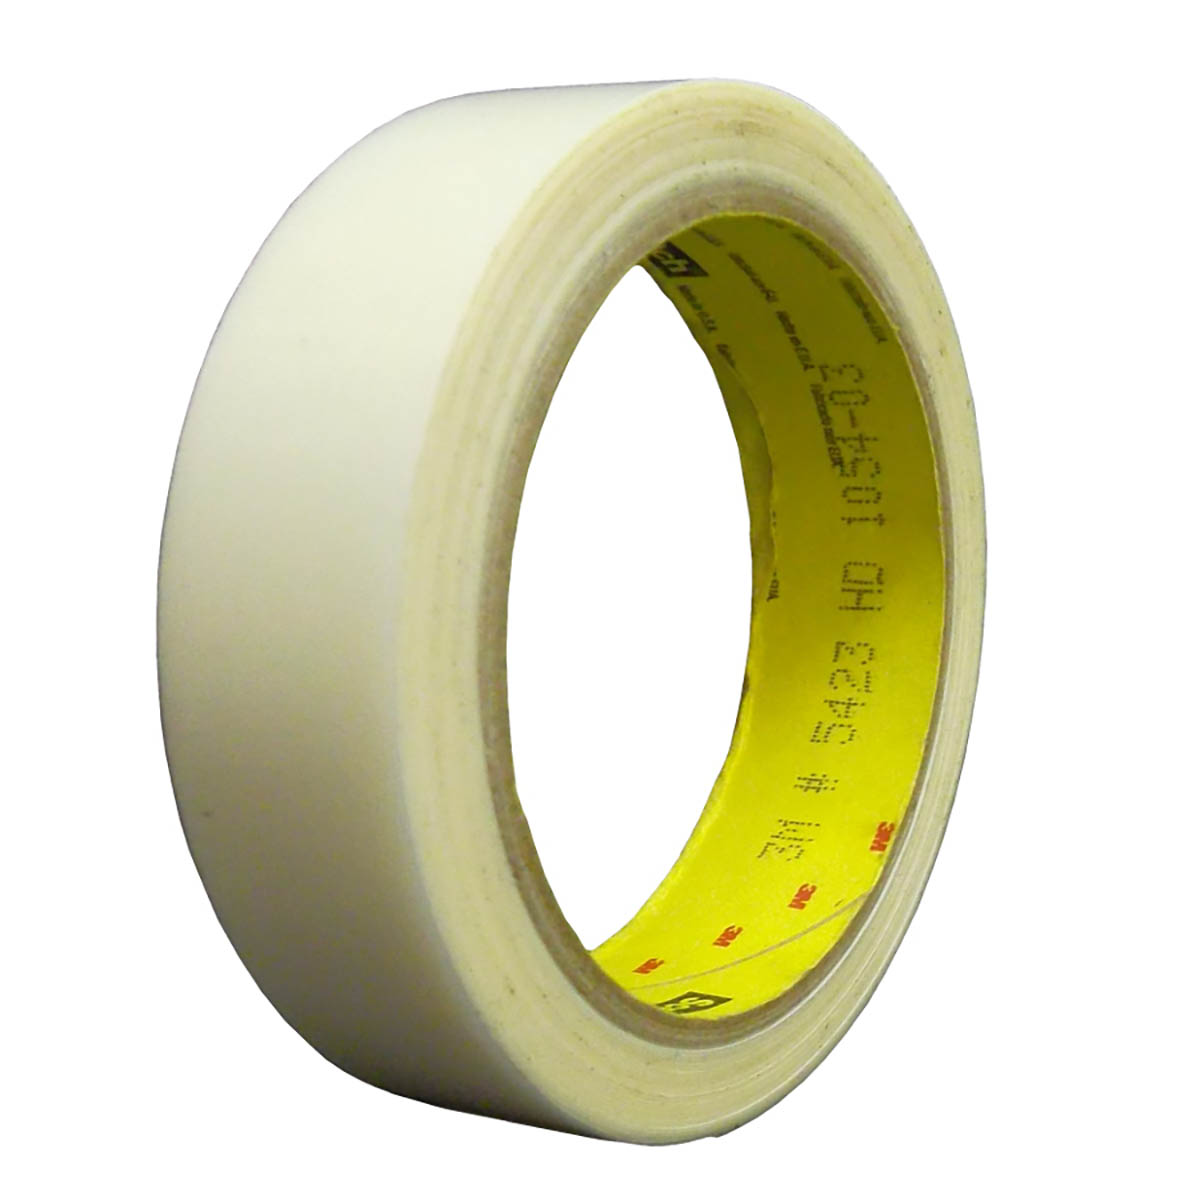 Slit Roll of 3M 5423 UHMW Polyethylene Tape